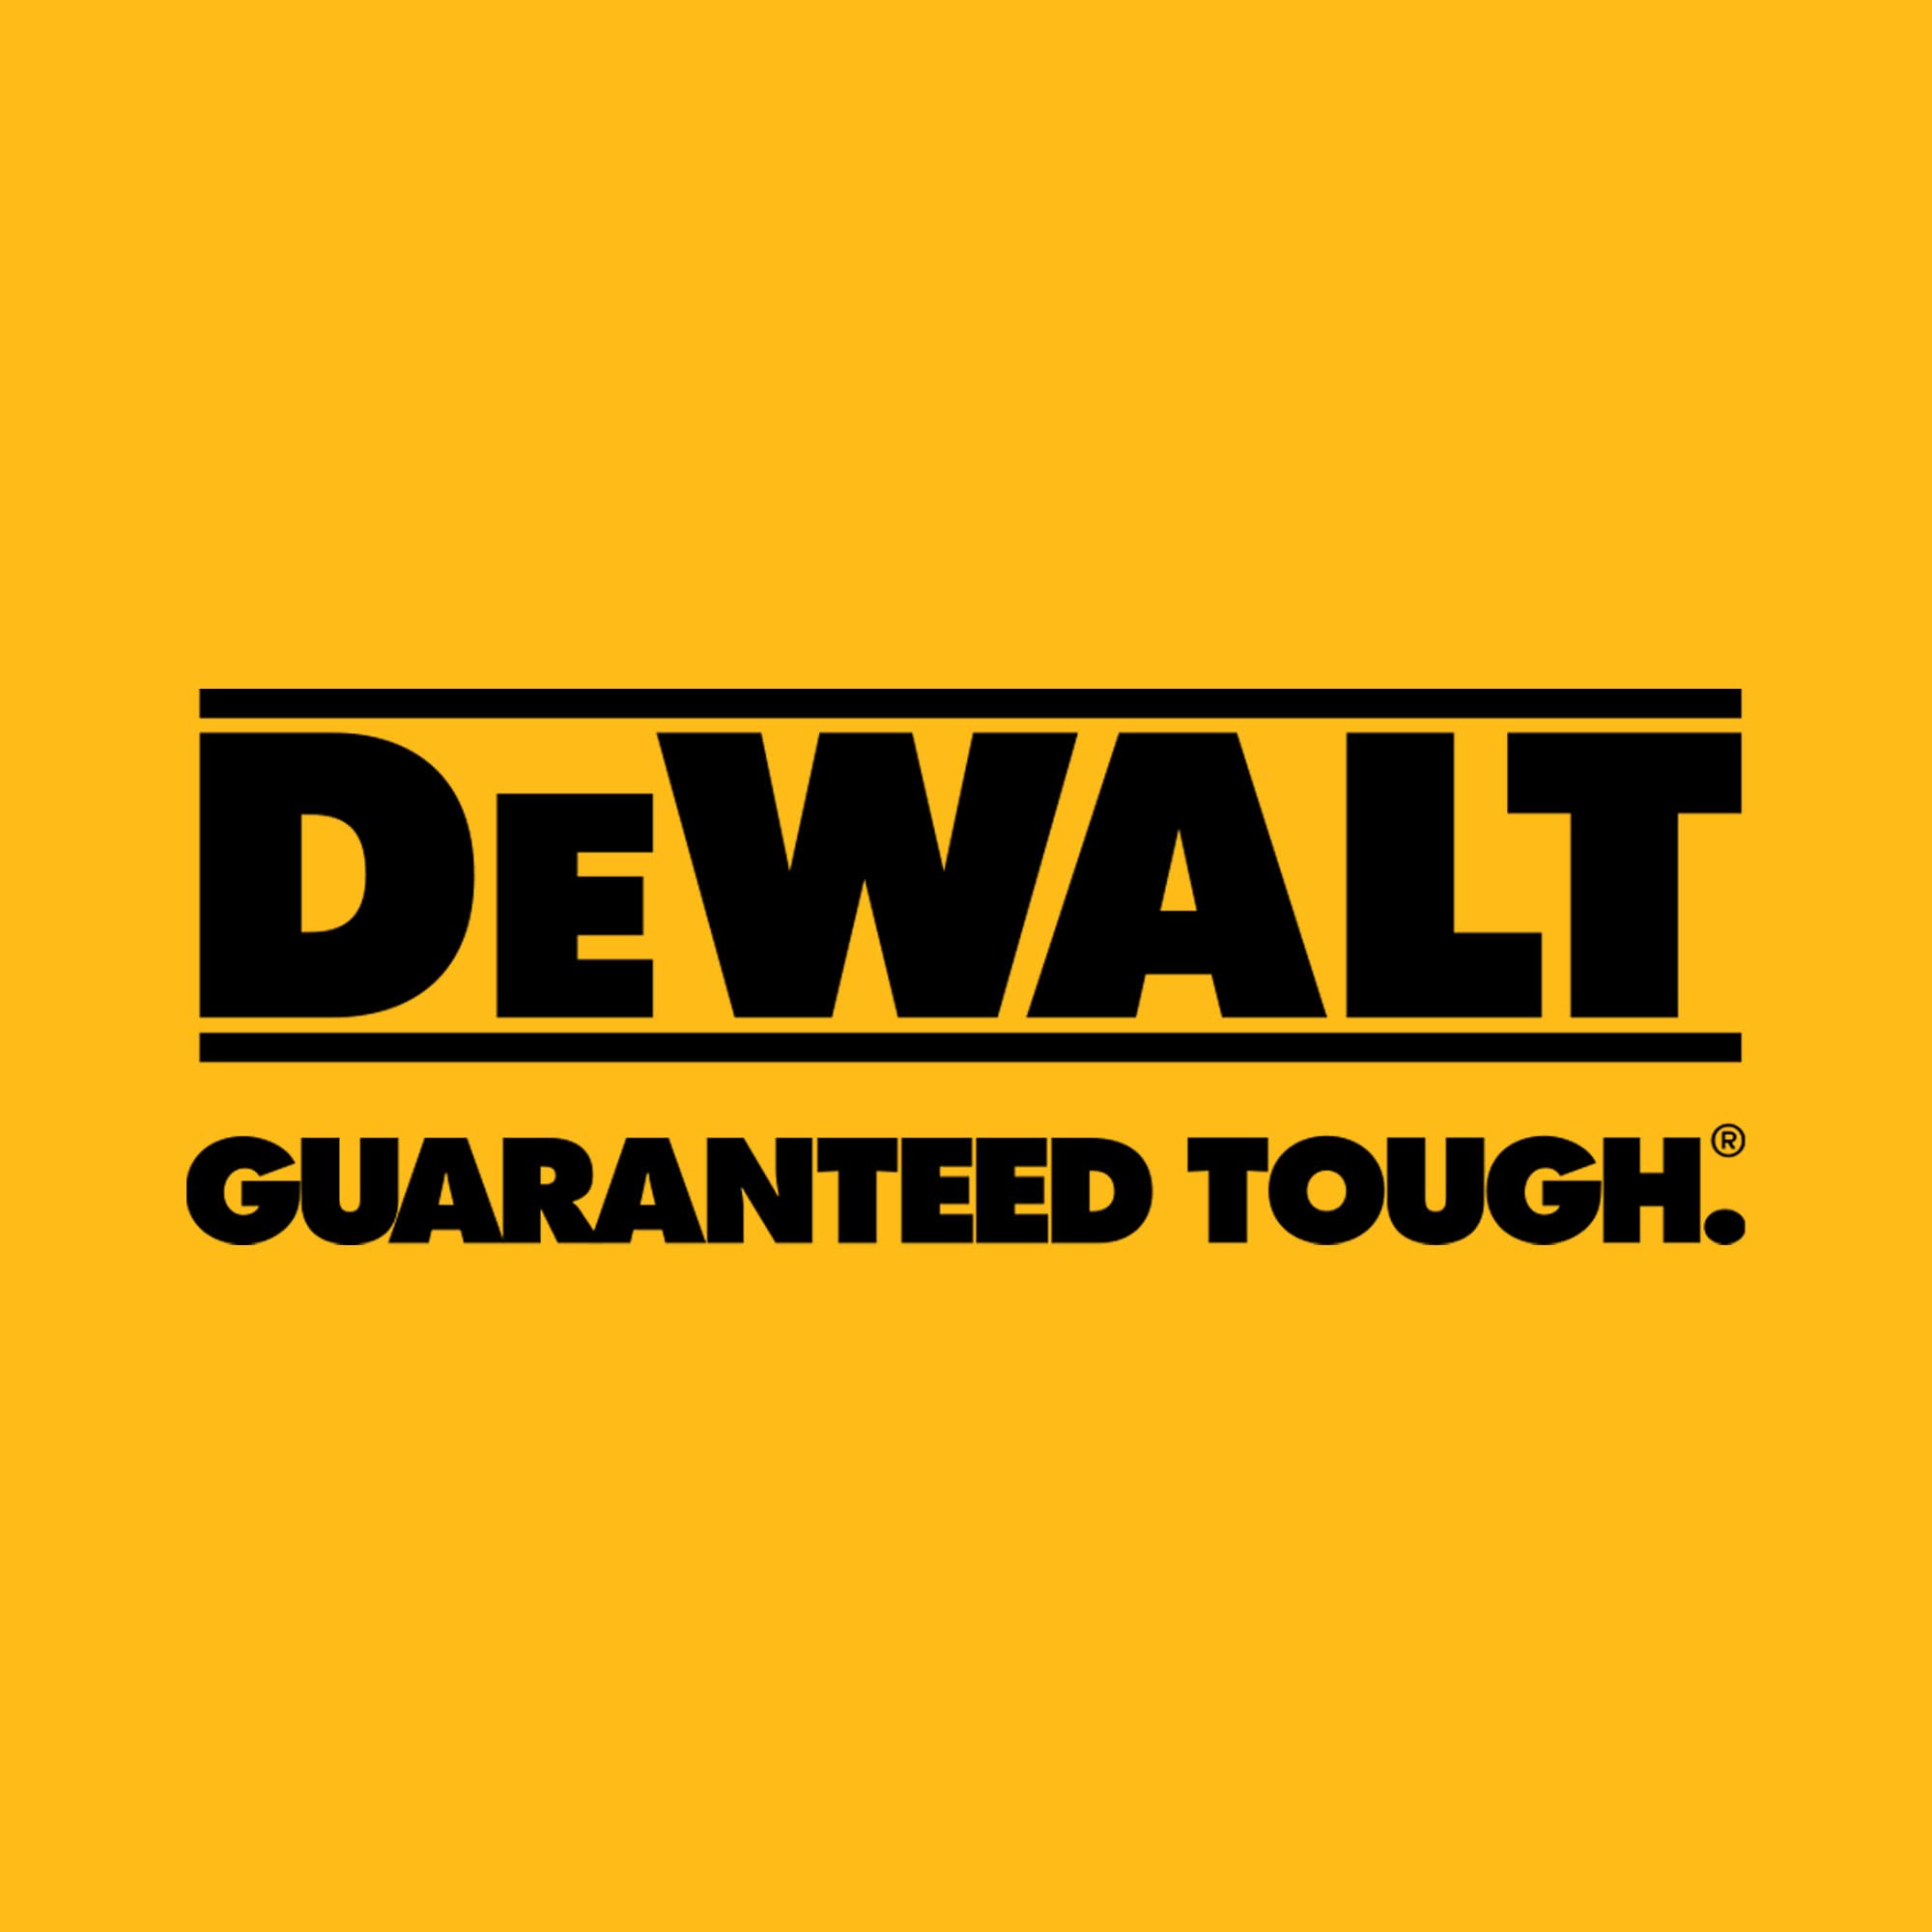 DEWALT 20V MAX* XR® BISCUIT JOINER, BRUSHLESS, Tool Only (DCW682B)